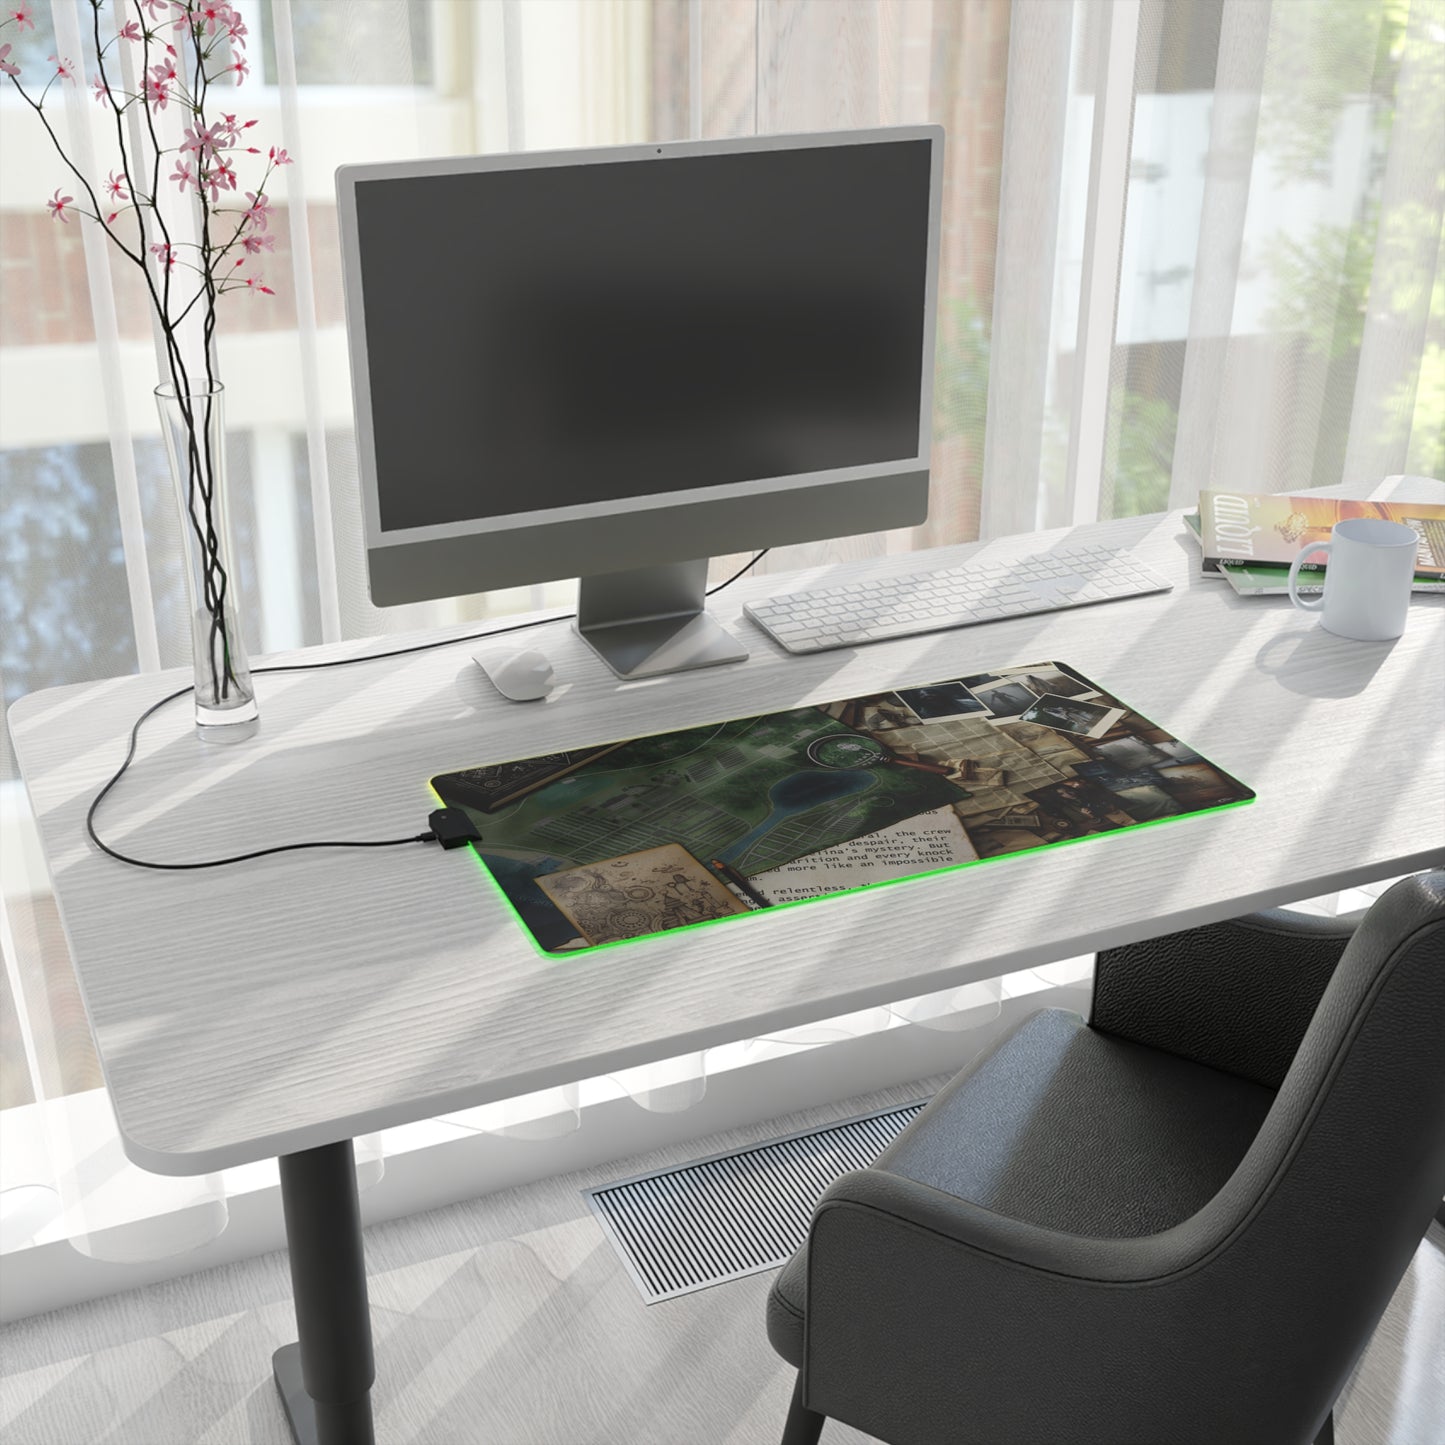 Neduz Maraheim Desk LED Gaming Mouse Pad with 14 RGB Lighting Settings